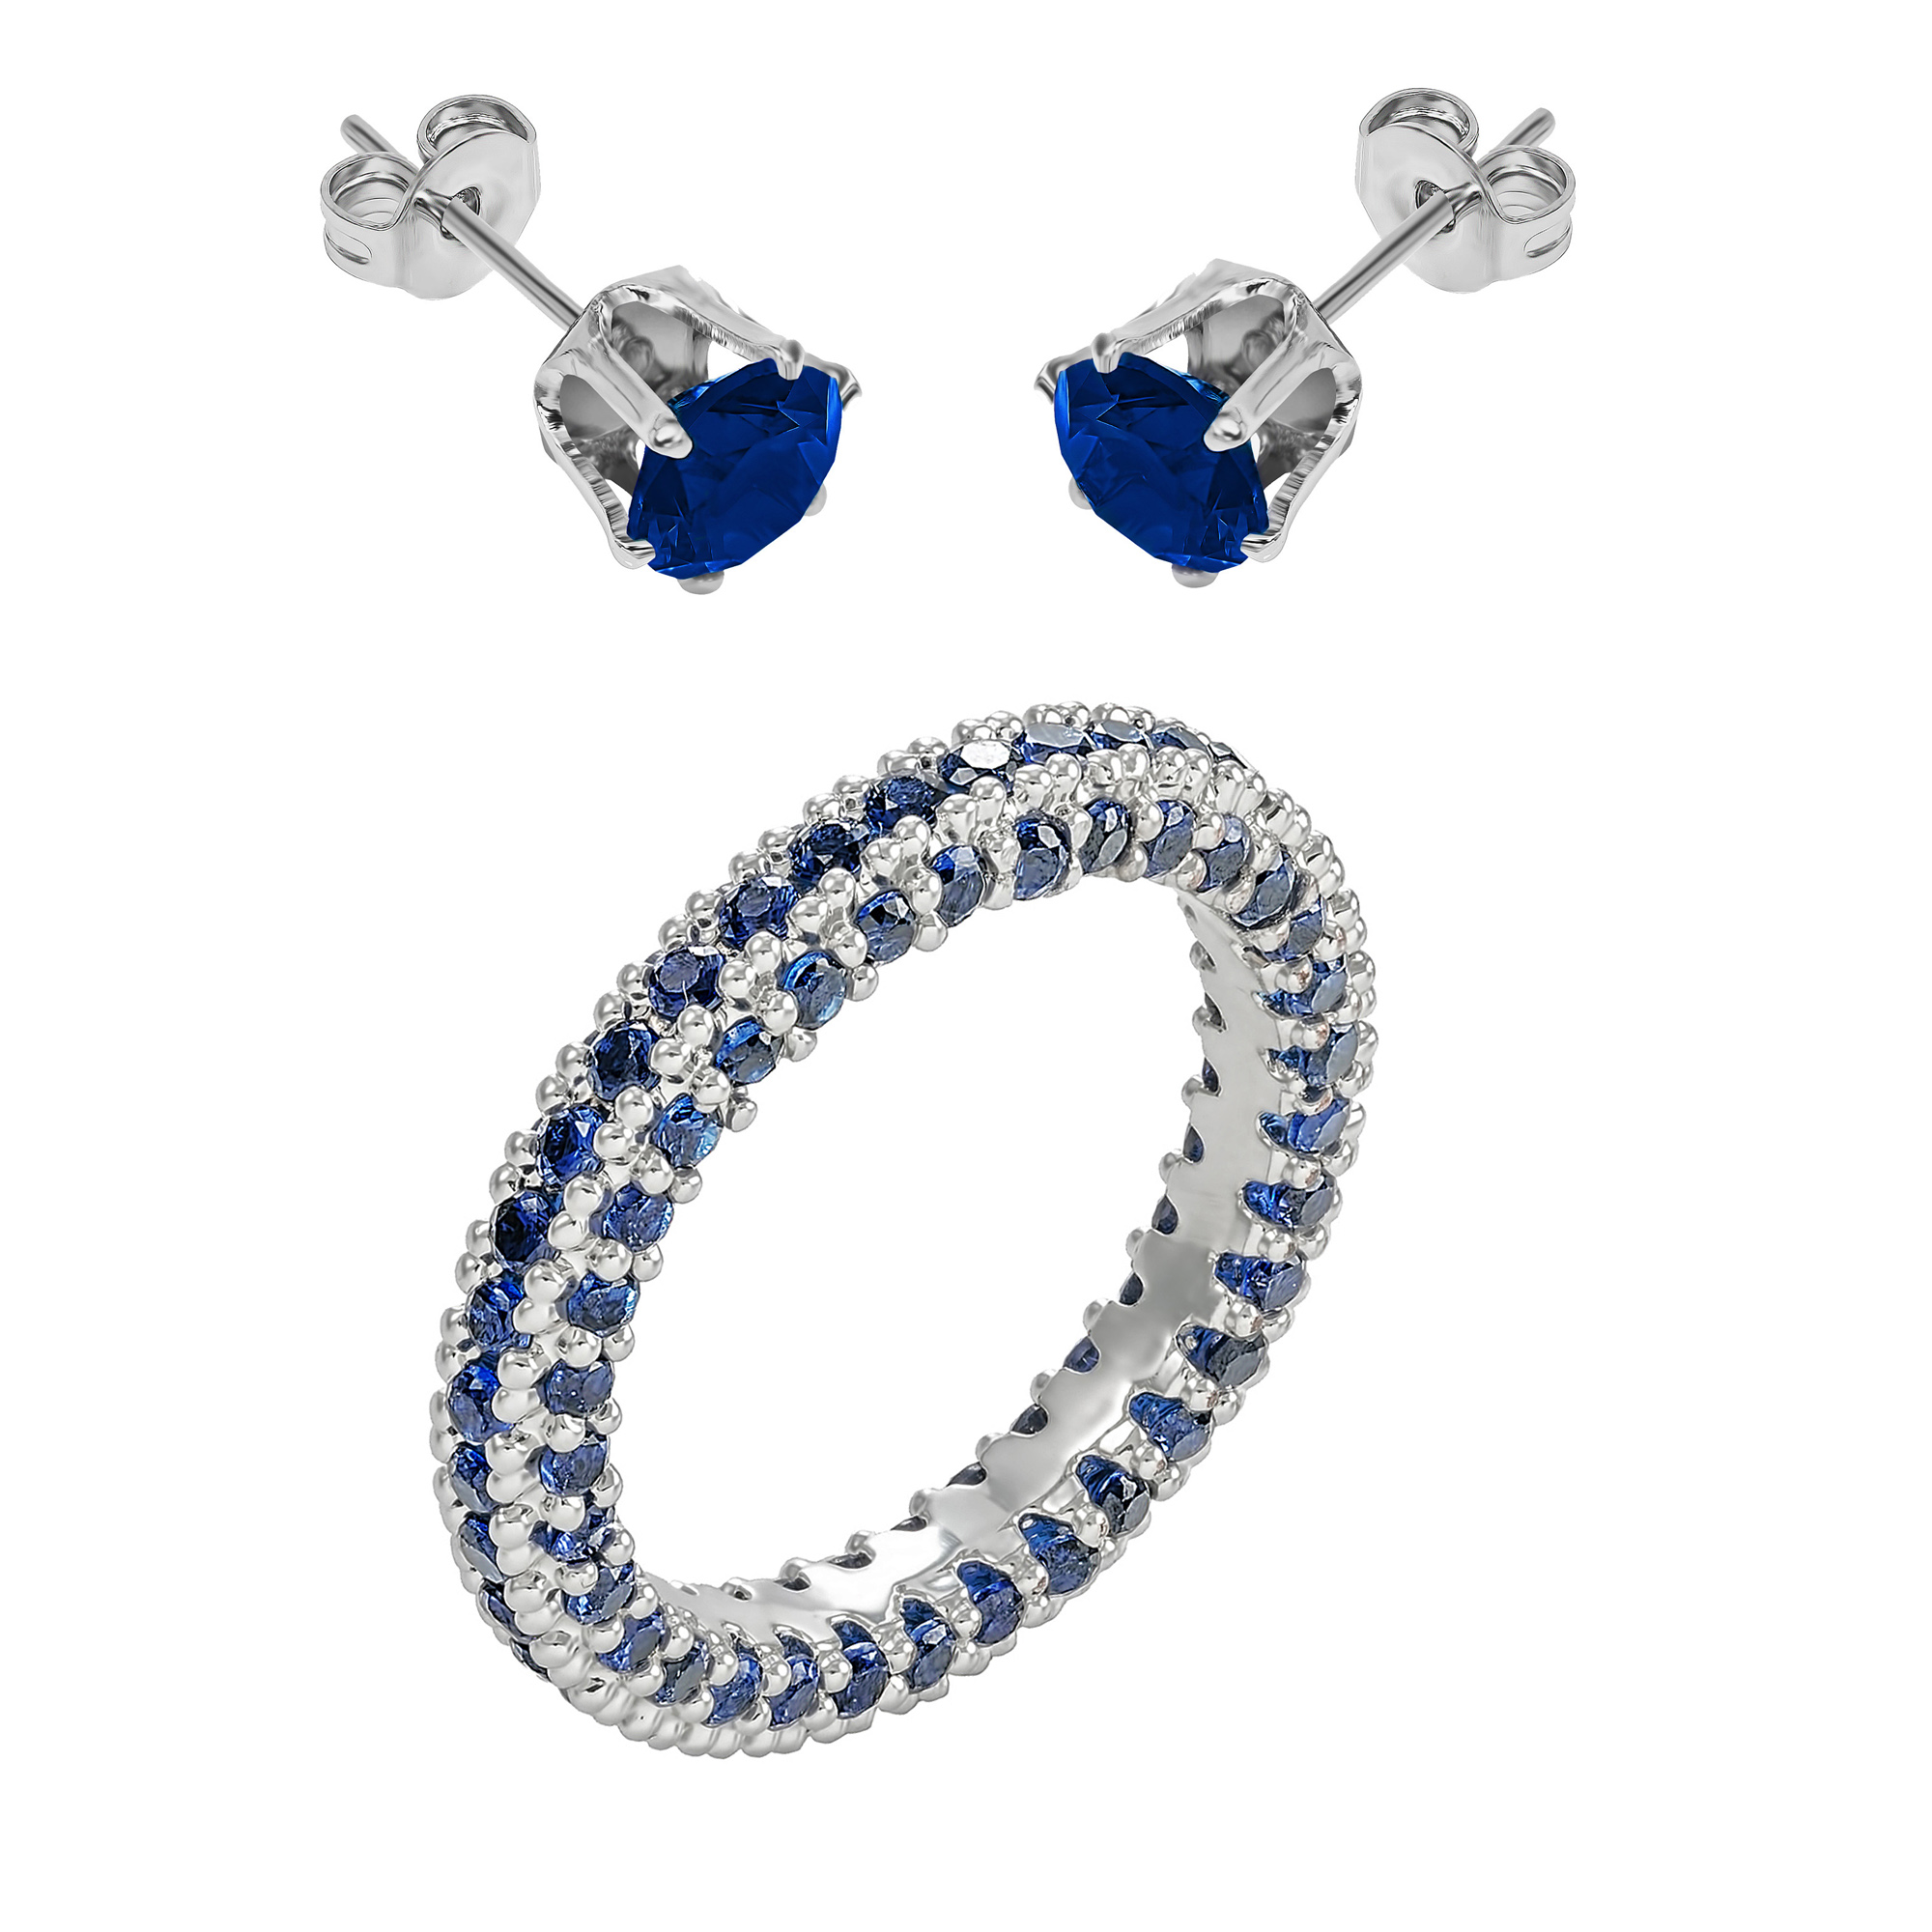 20 pcs - Blue Eternity Cubic Zirconia Crystals Band Ring and Earring Set - Random Ring Size - Total 10 Sets|GCJ026GCJ019-Random Ring Size|UK SELLER